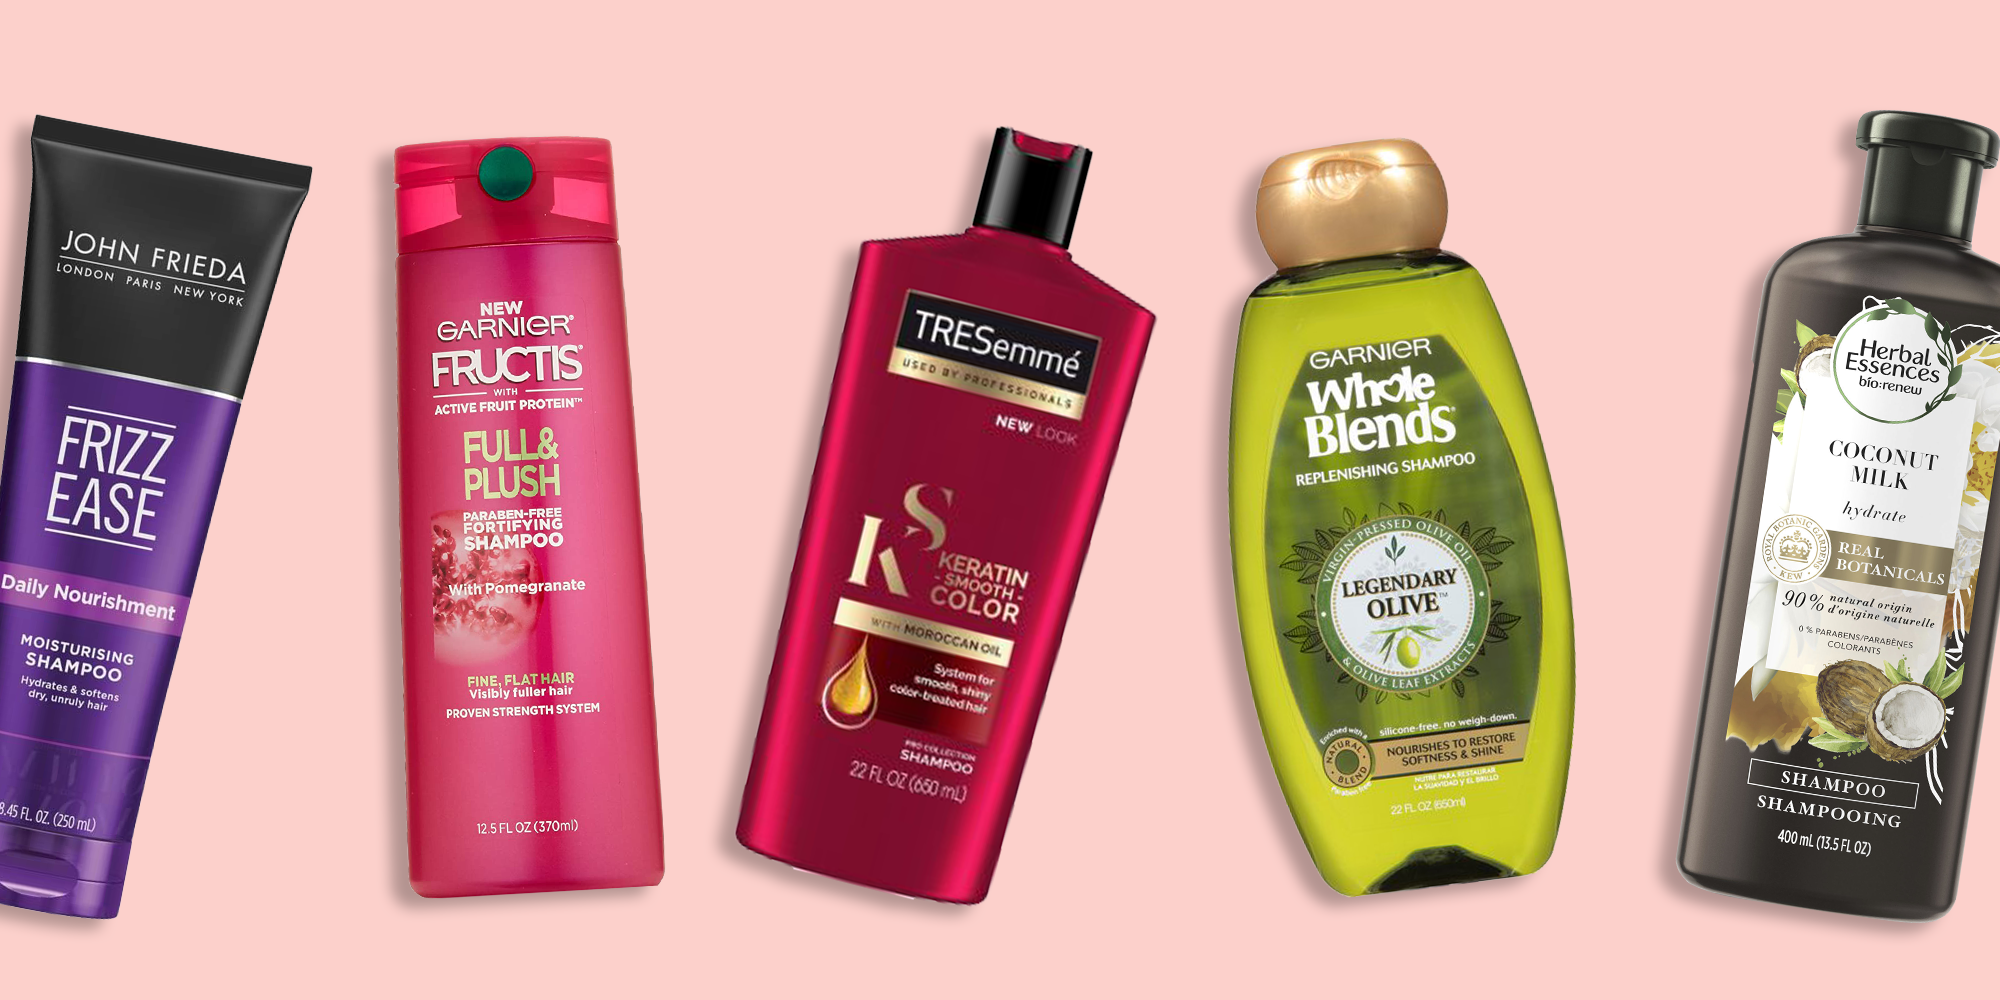 ihærdige ægteskab Prestigefyldte 15 Best Shampoos of 2022 - Top Shampoo Brands for Every Hair Type & Texture